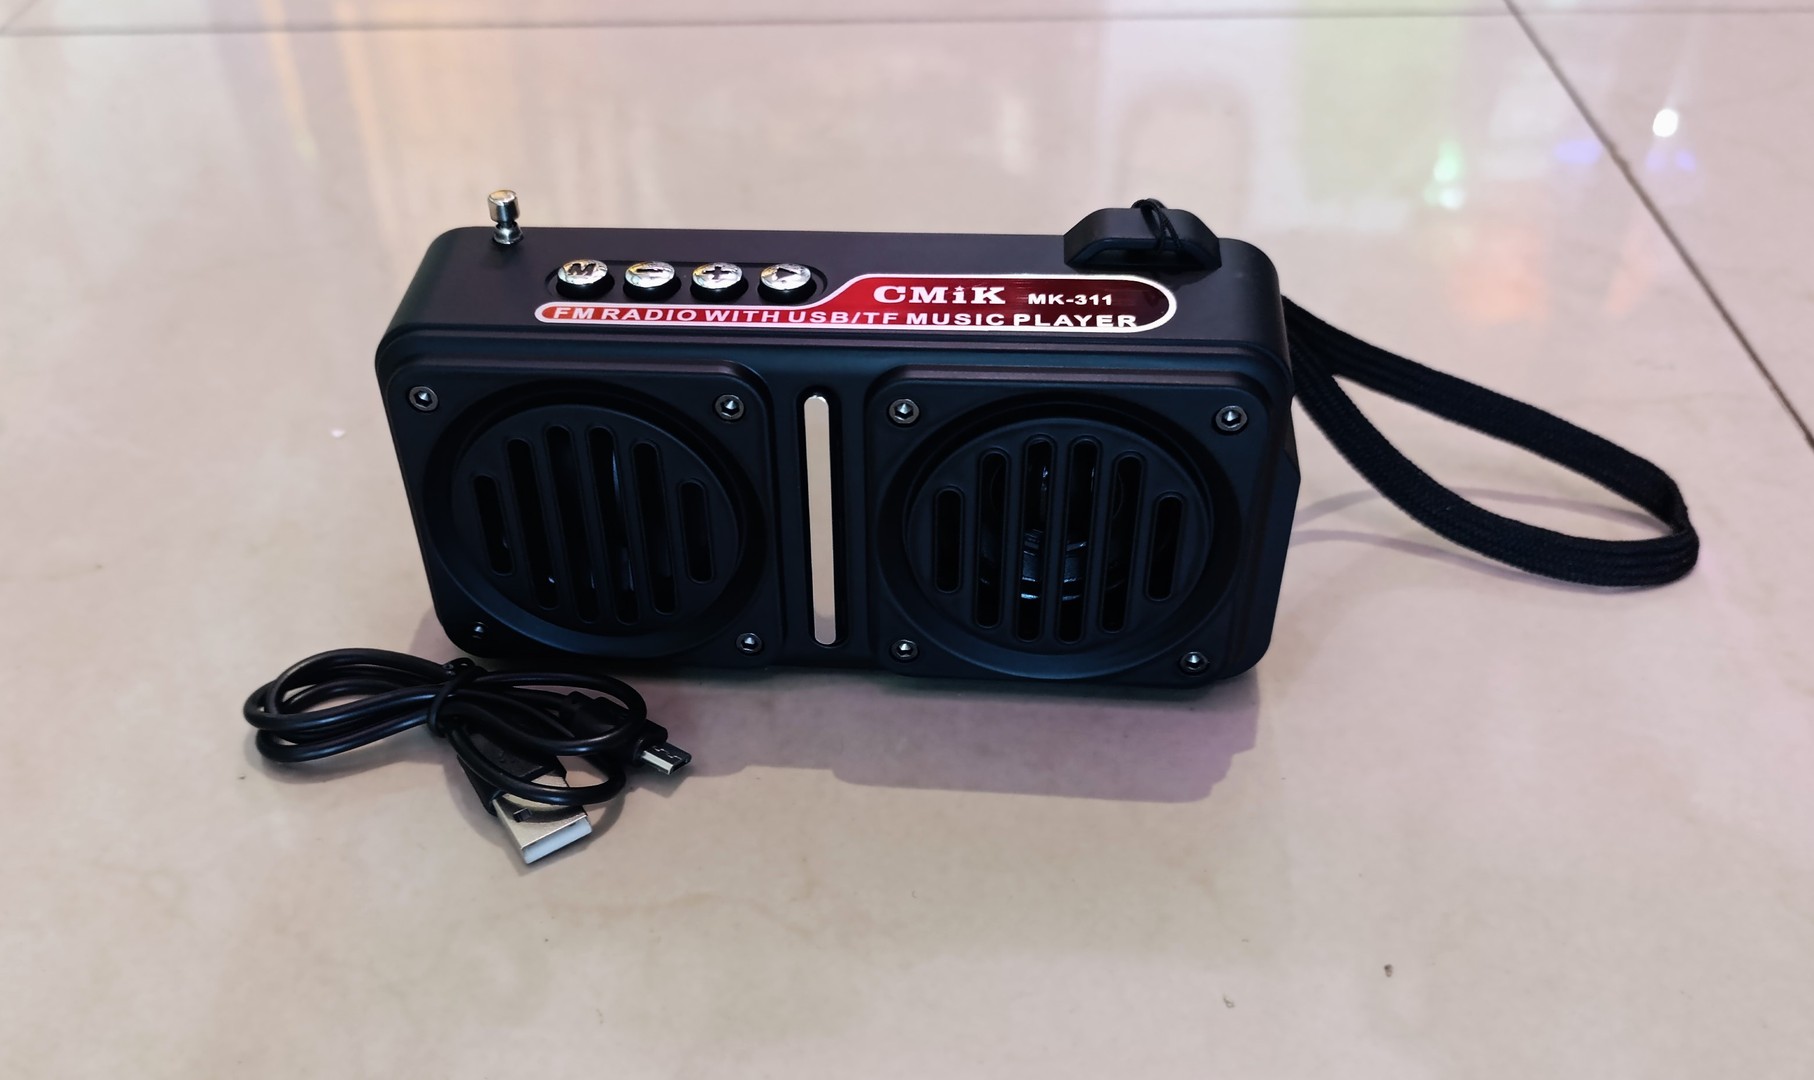 camaras y audio - Radio MK-311, emisora,  3